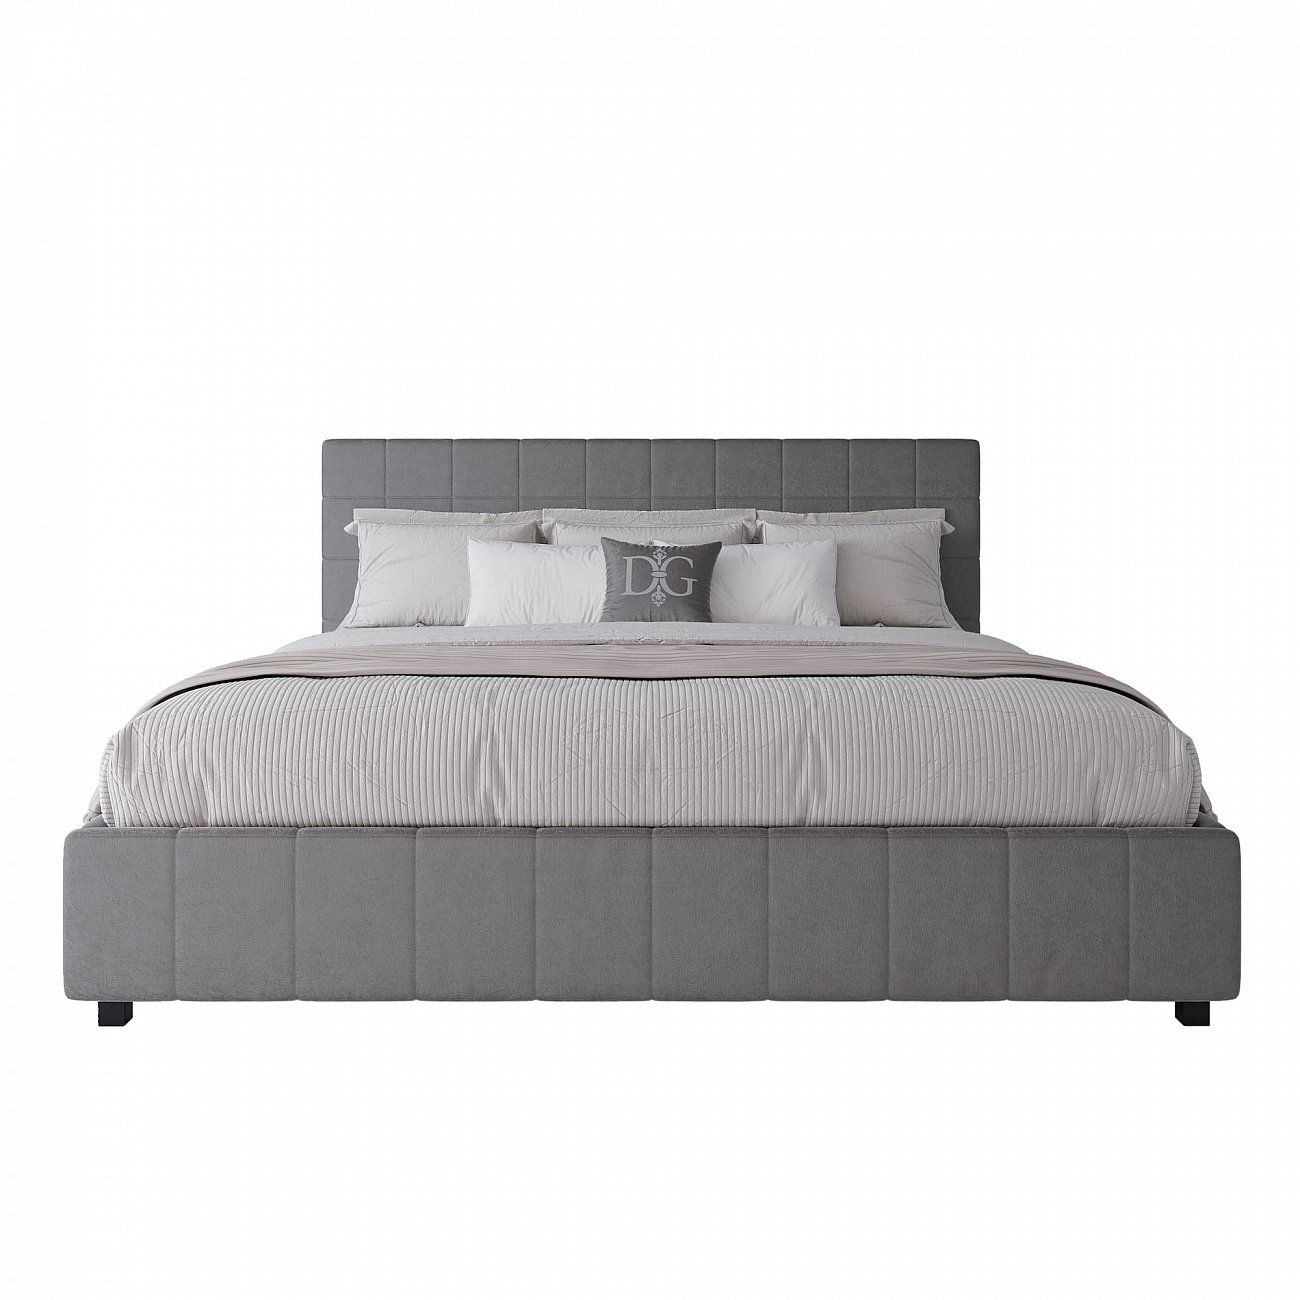 Euro bed 200x200 cm gray-beige Shining Modern